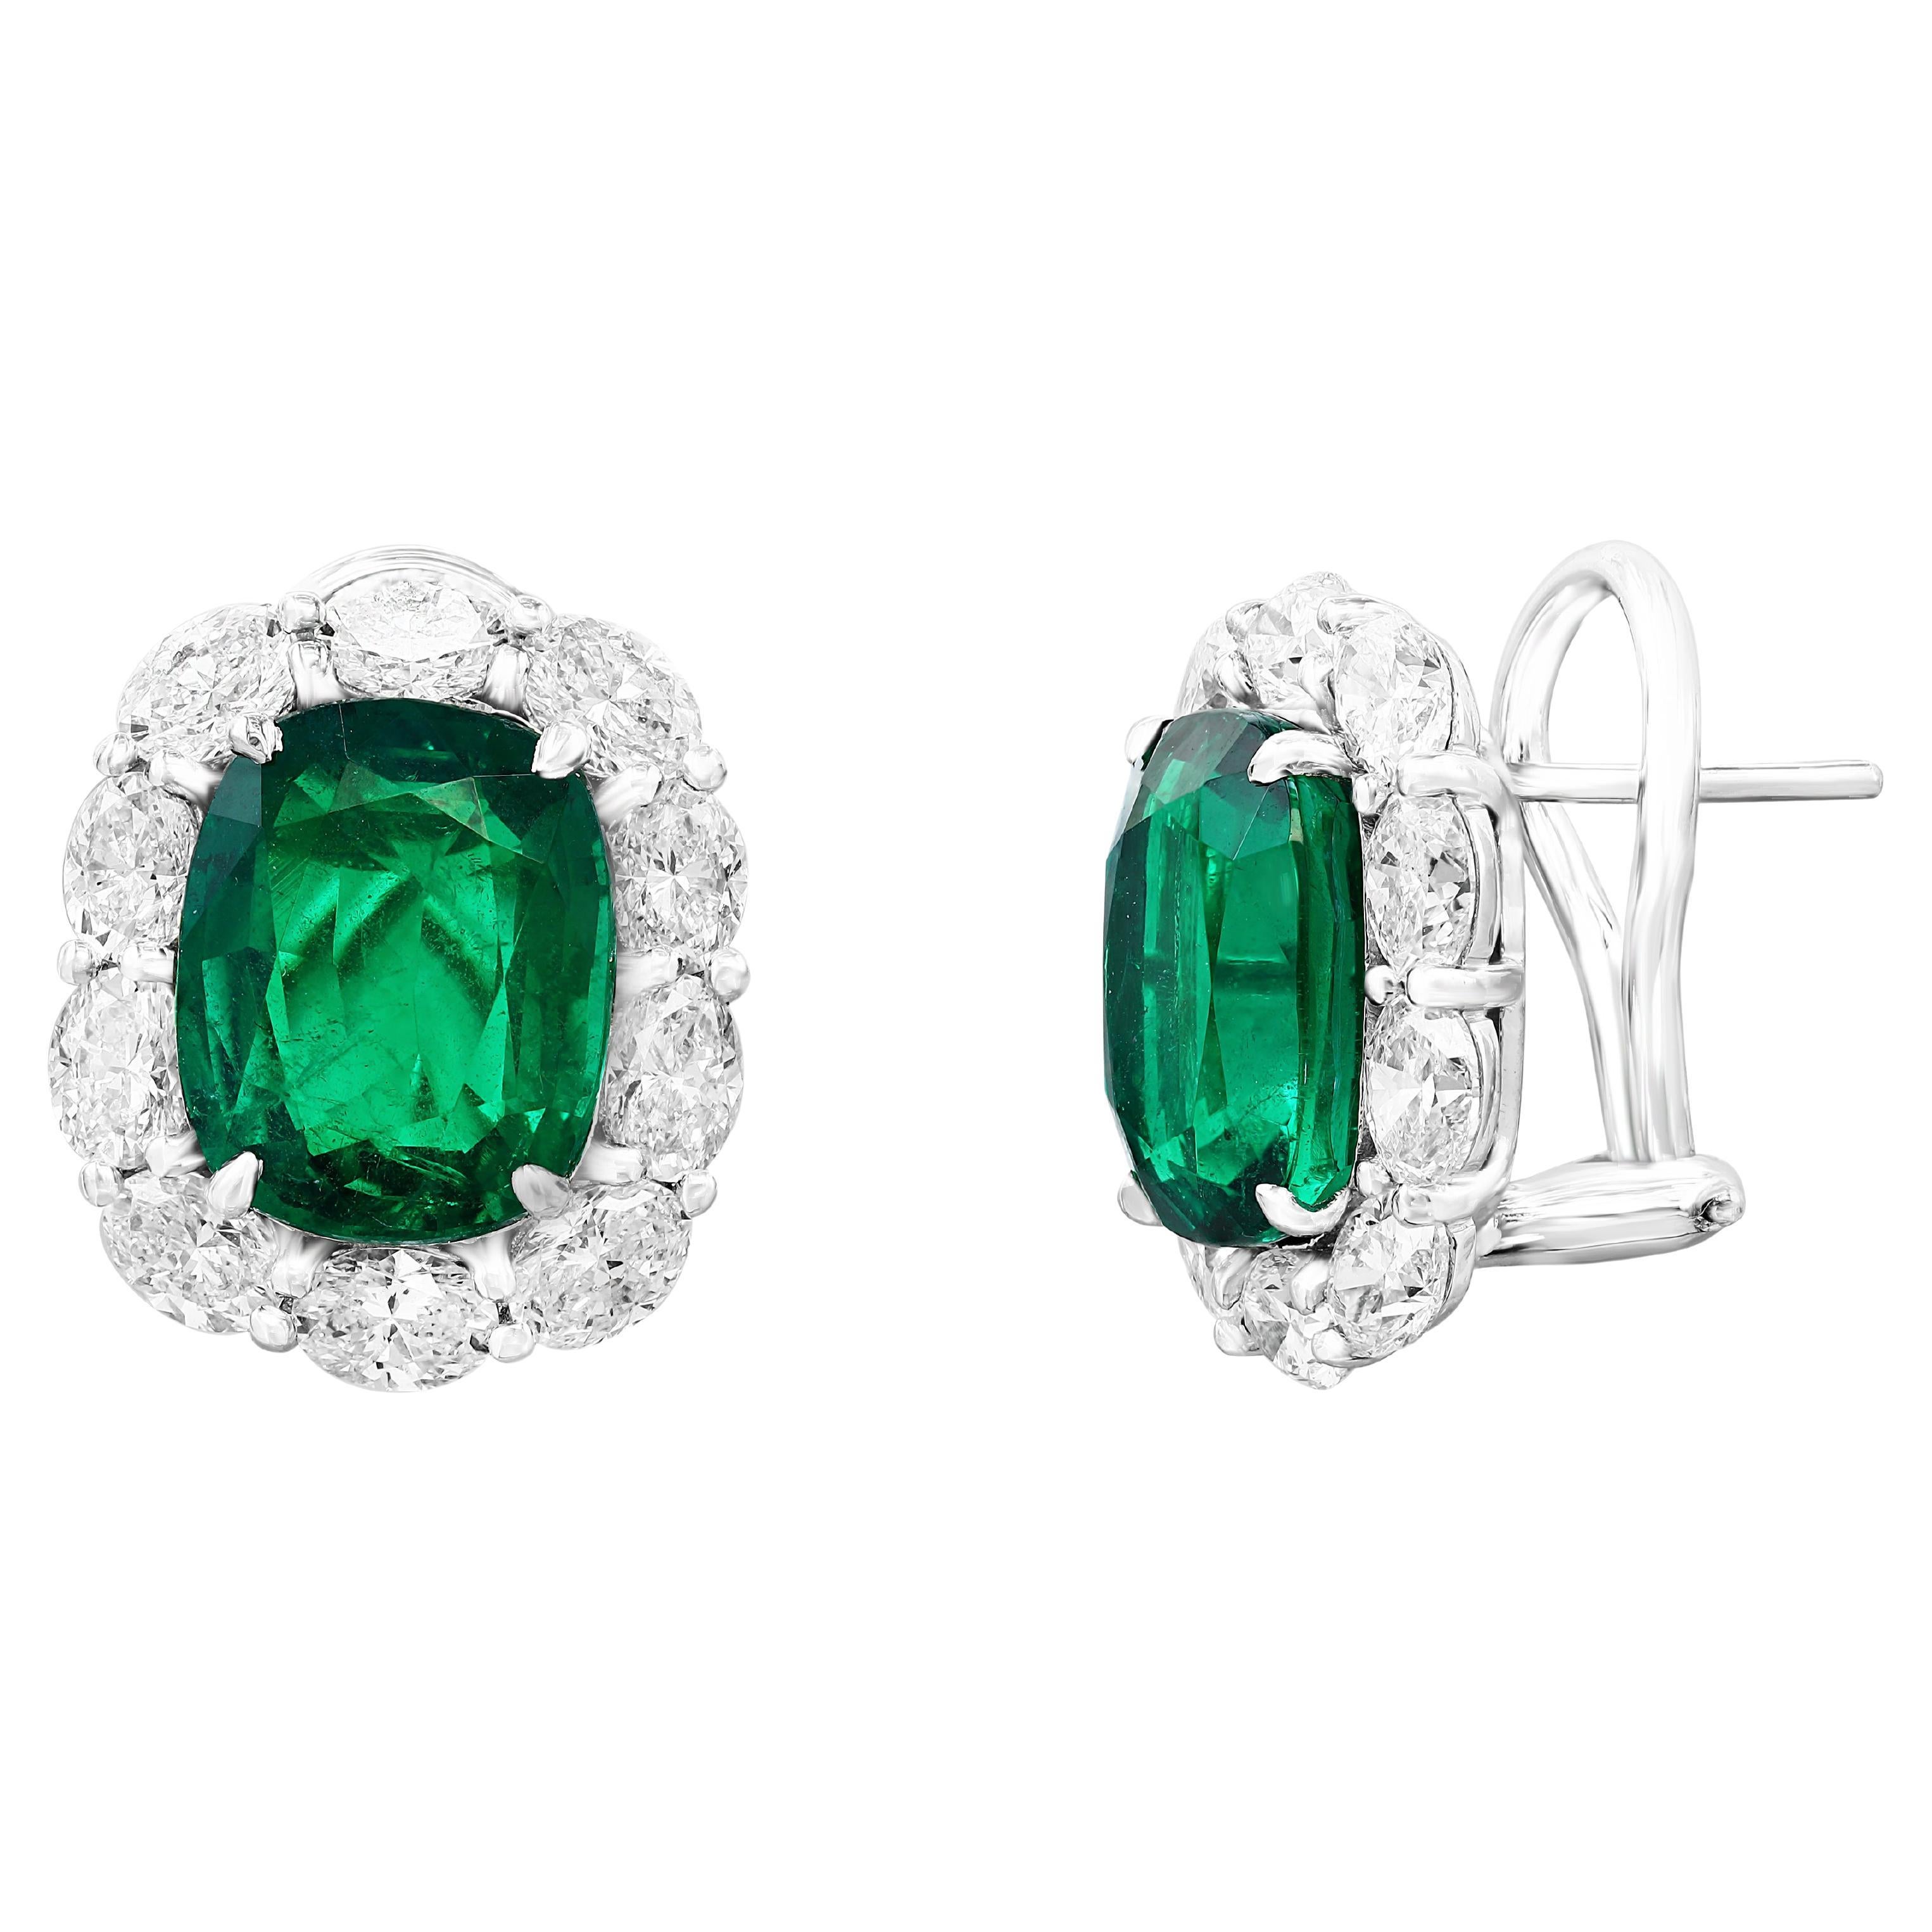 7.77 Carat Cushion Cut Emerald and Diamond Halo Earring in 18K White Gold